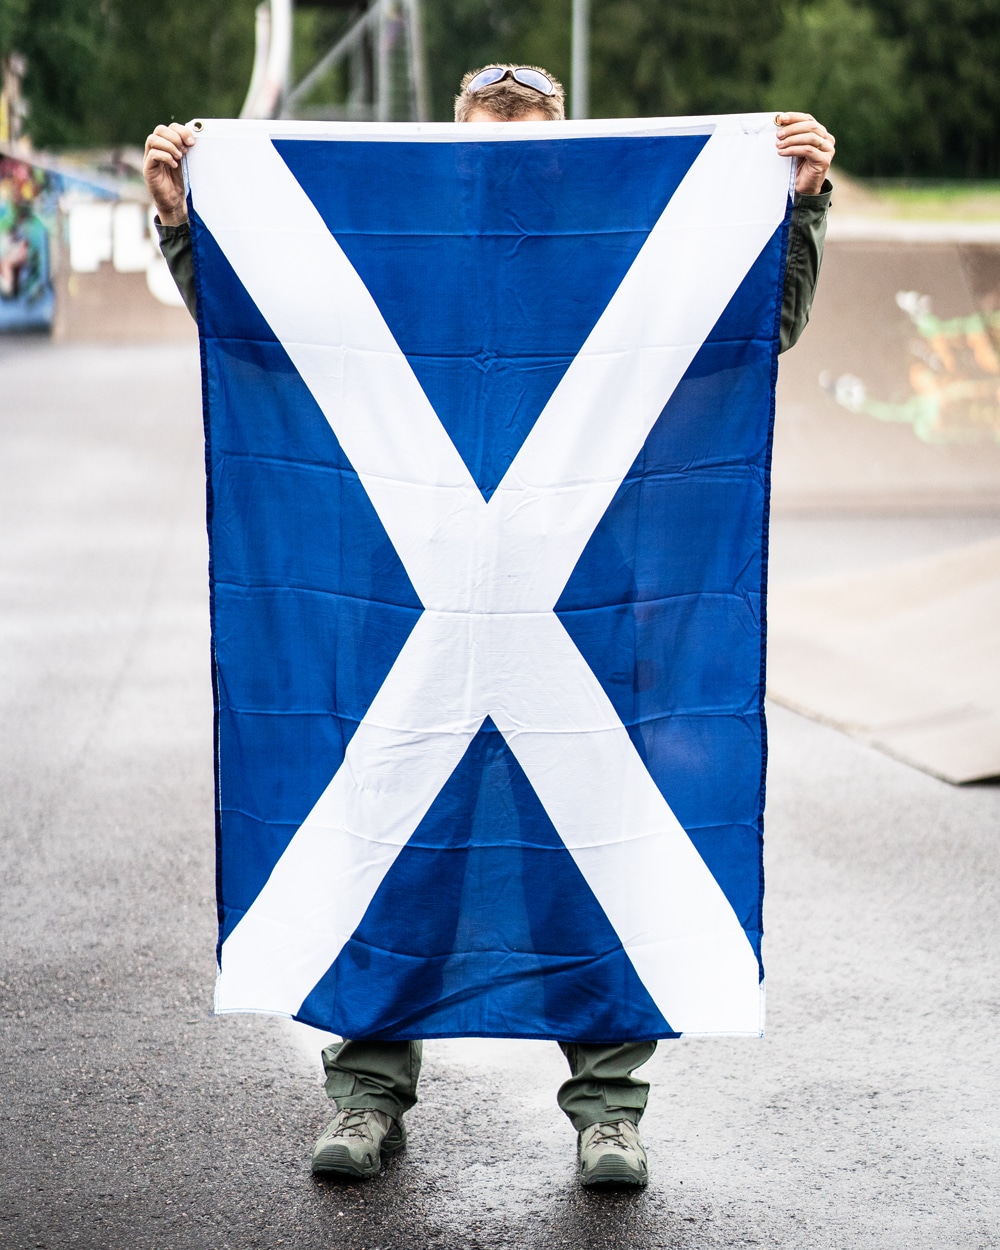 Skotlannin Valtion Lippu